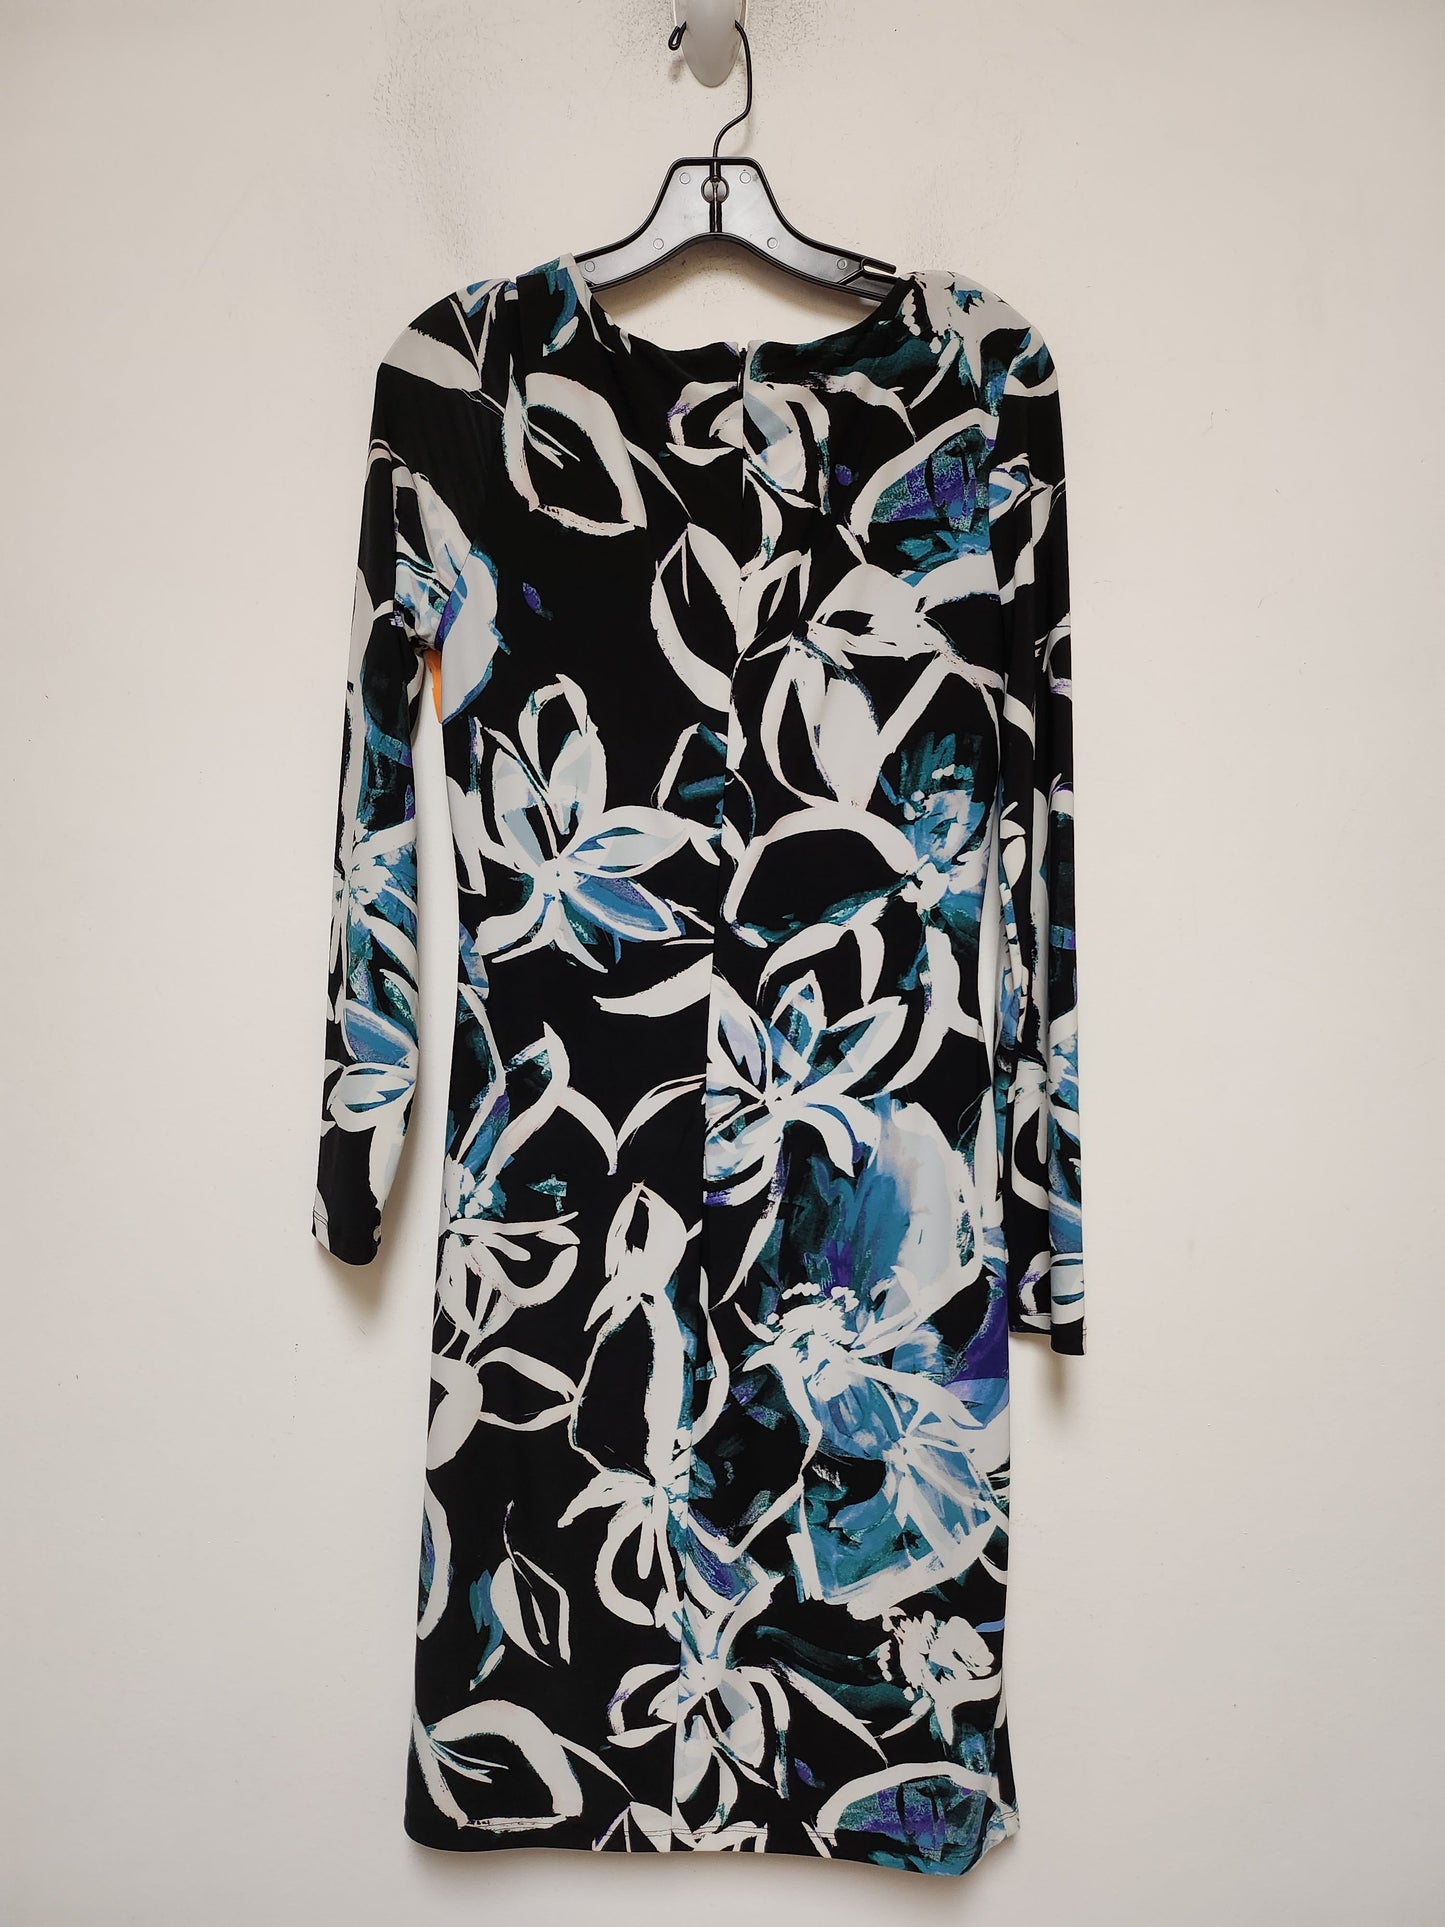 Dress Casual Midi By Lauren By Ralph Lauren  Size: S